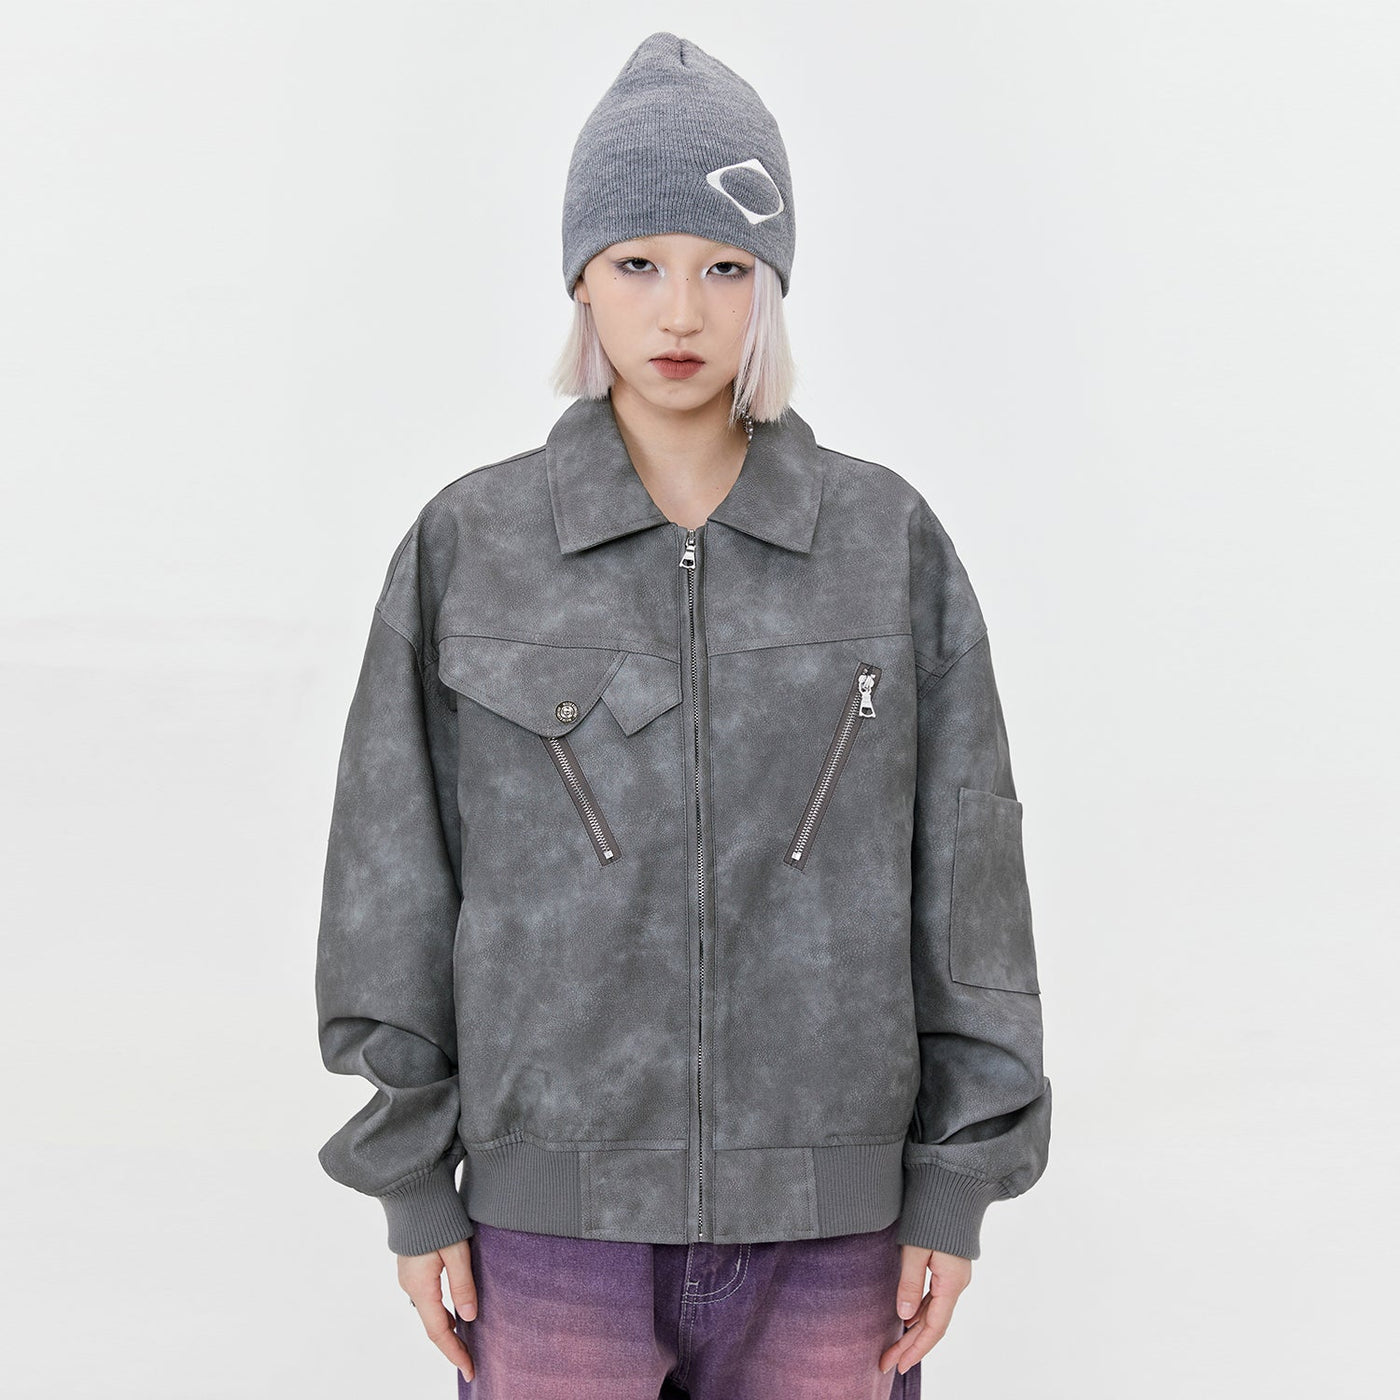 Made Extreme Washed Zip Pocket Jacket Korean Street Fashion Jacket By Made Extreme Shop Online at OH Vault